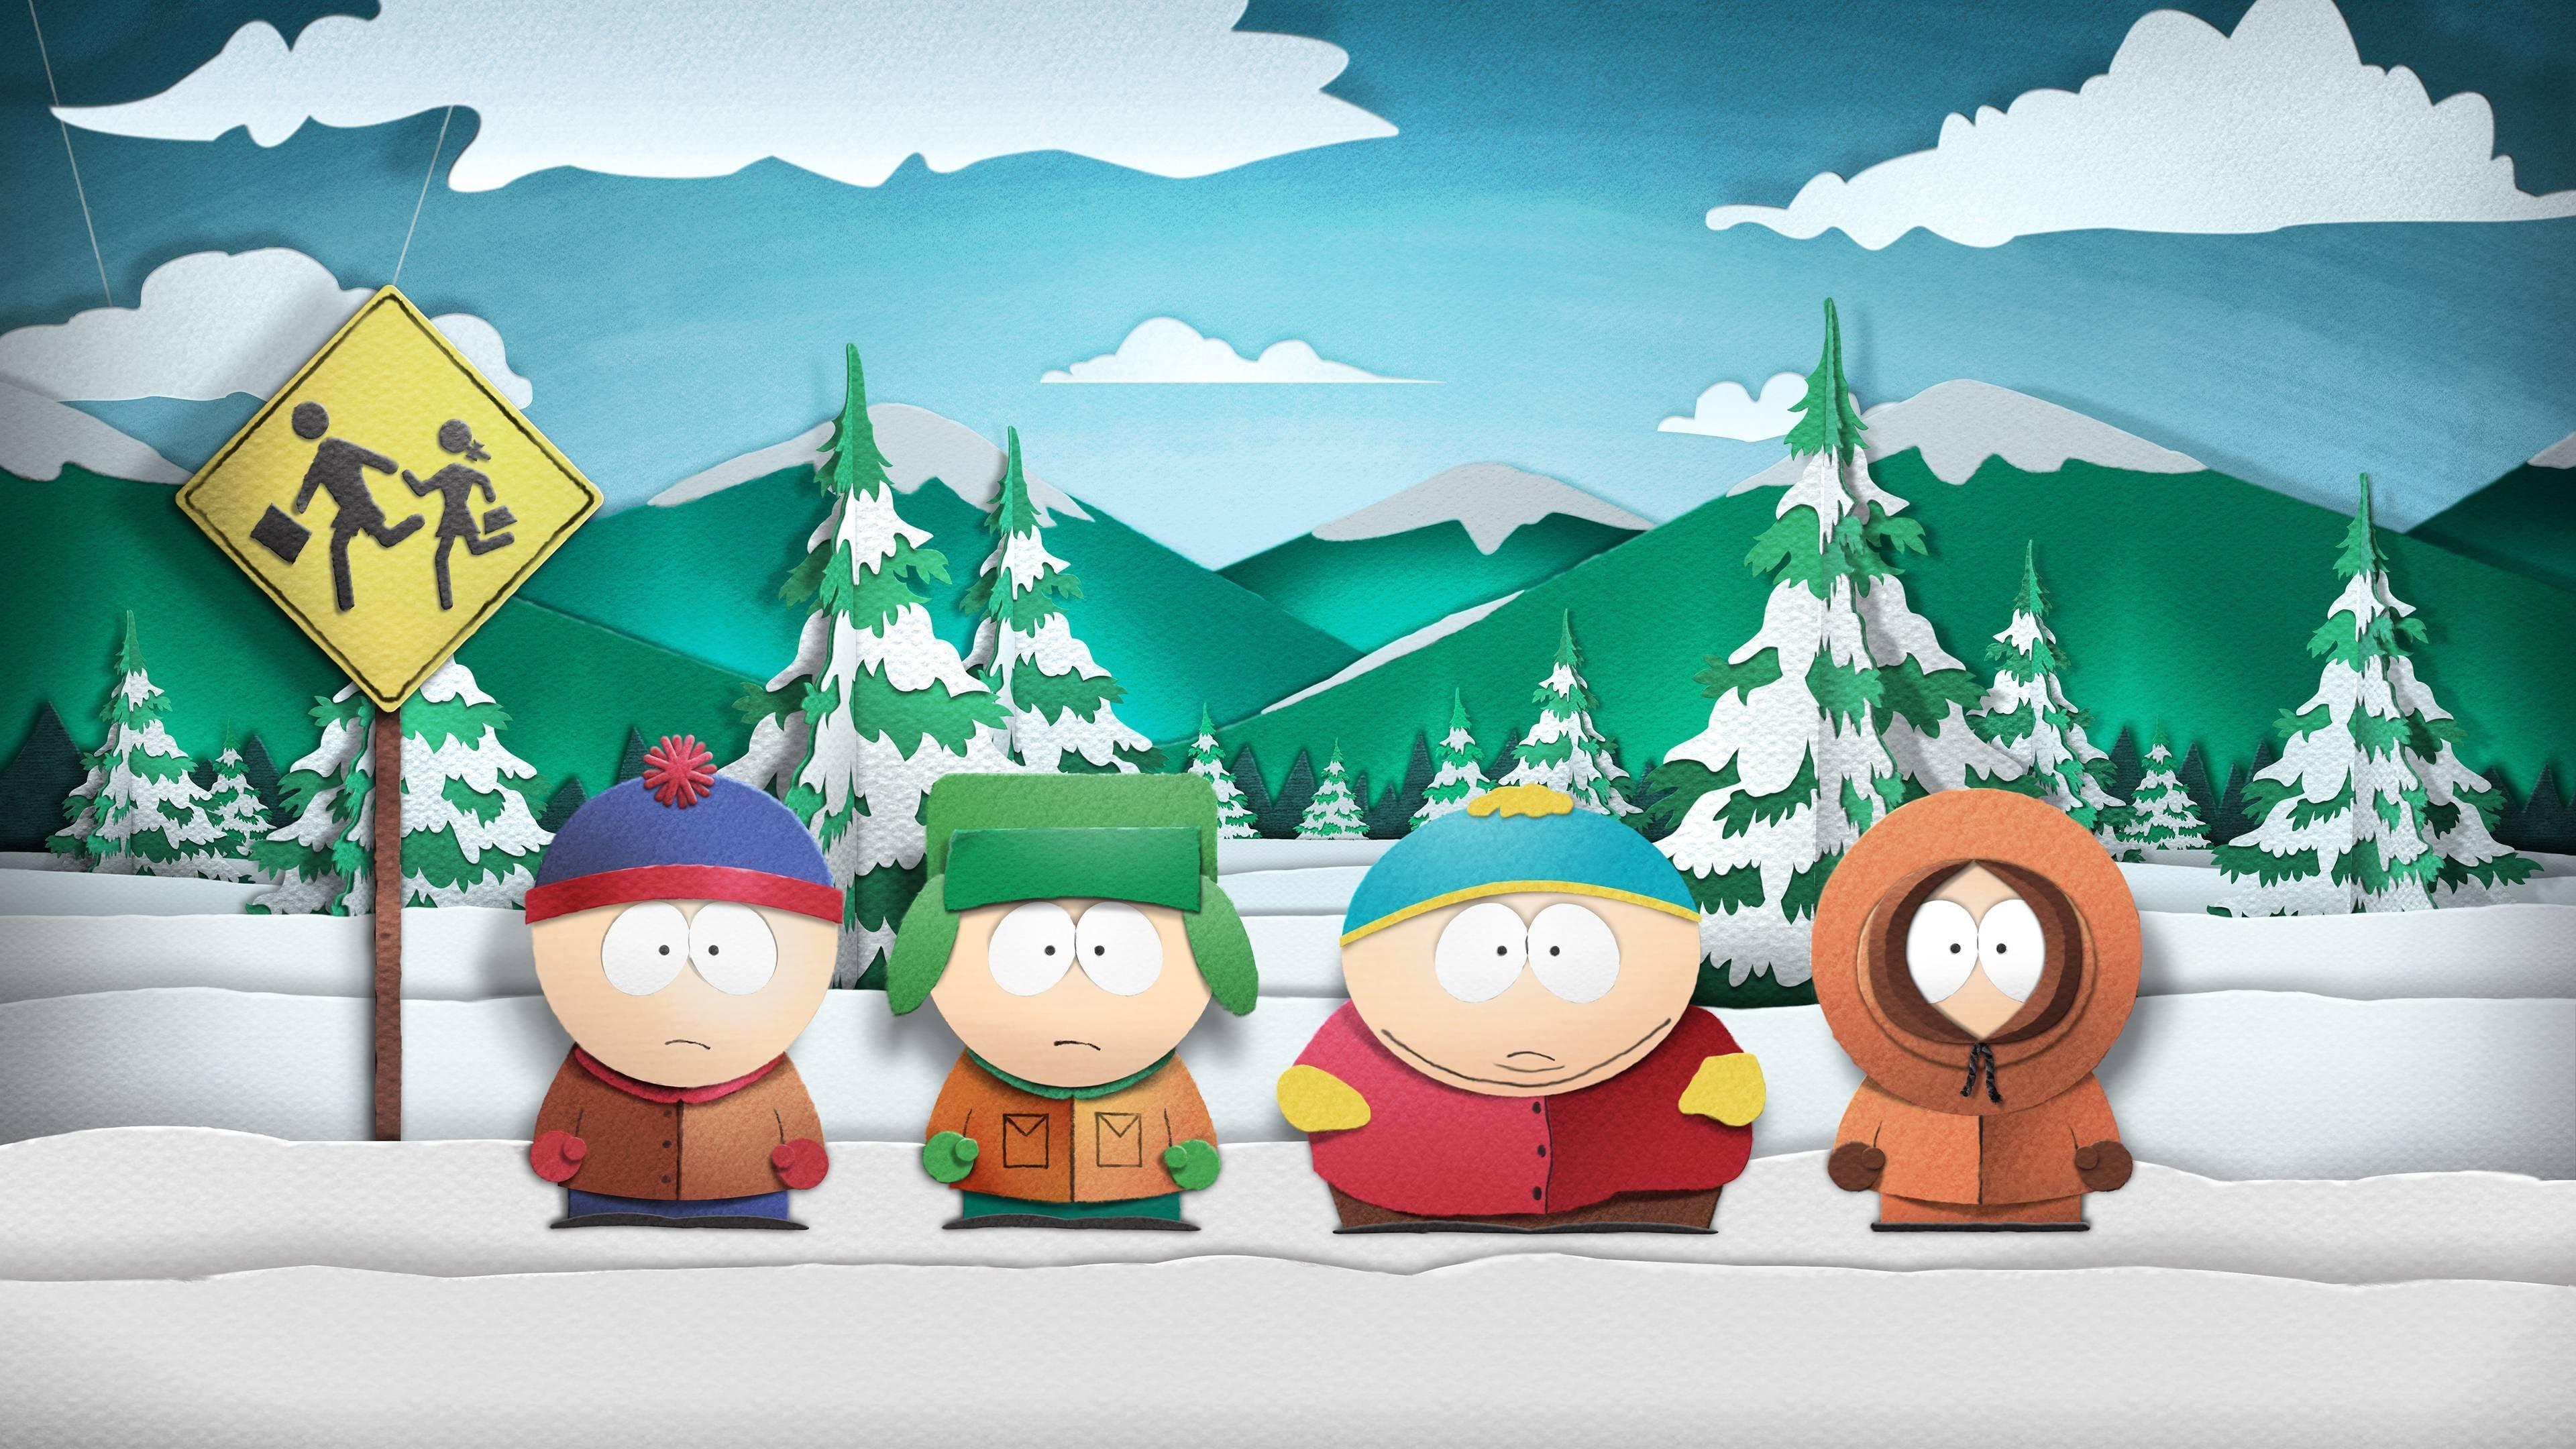 South Park backdrop